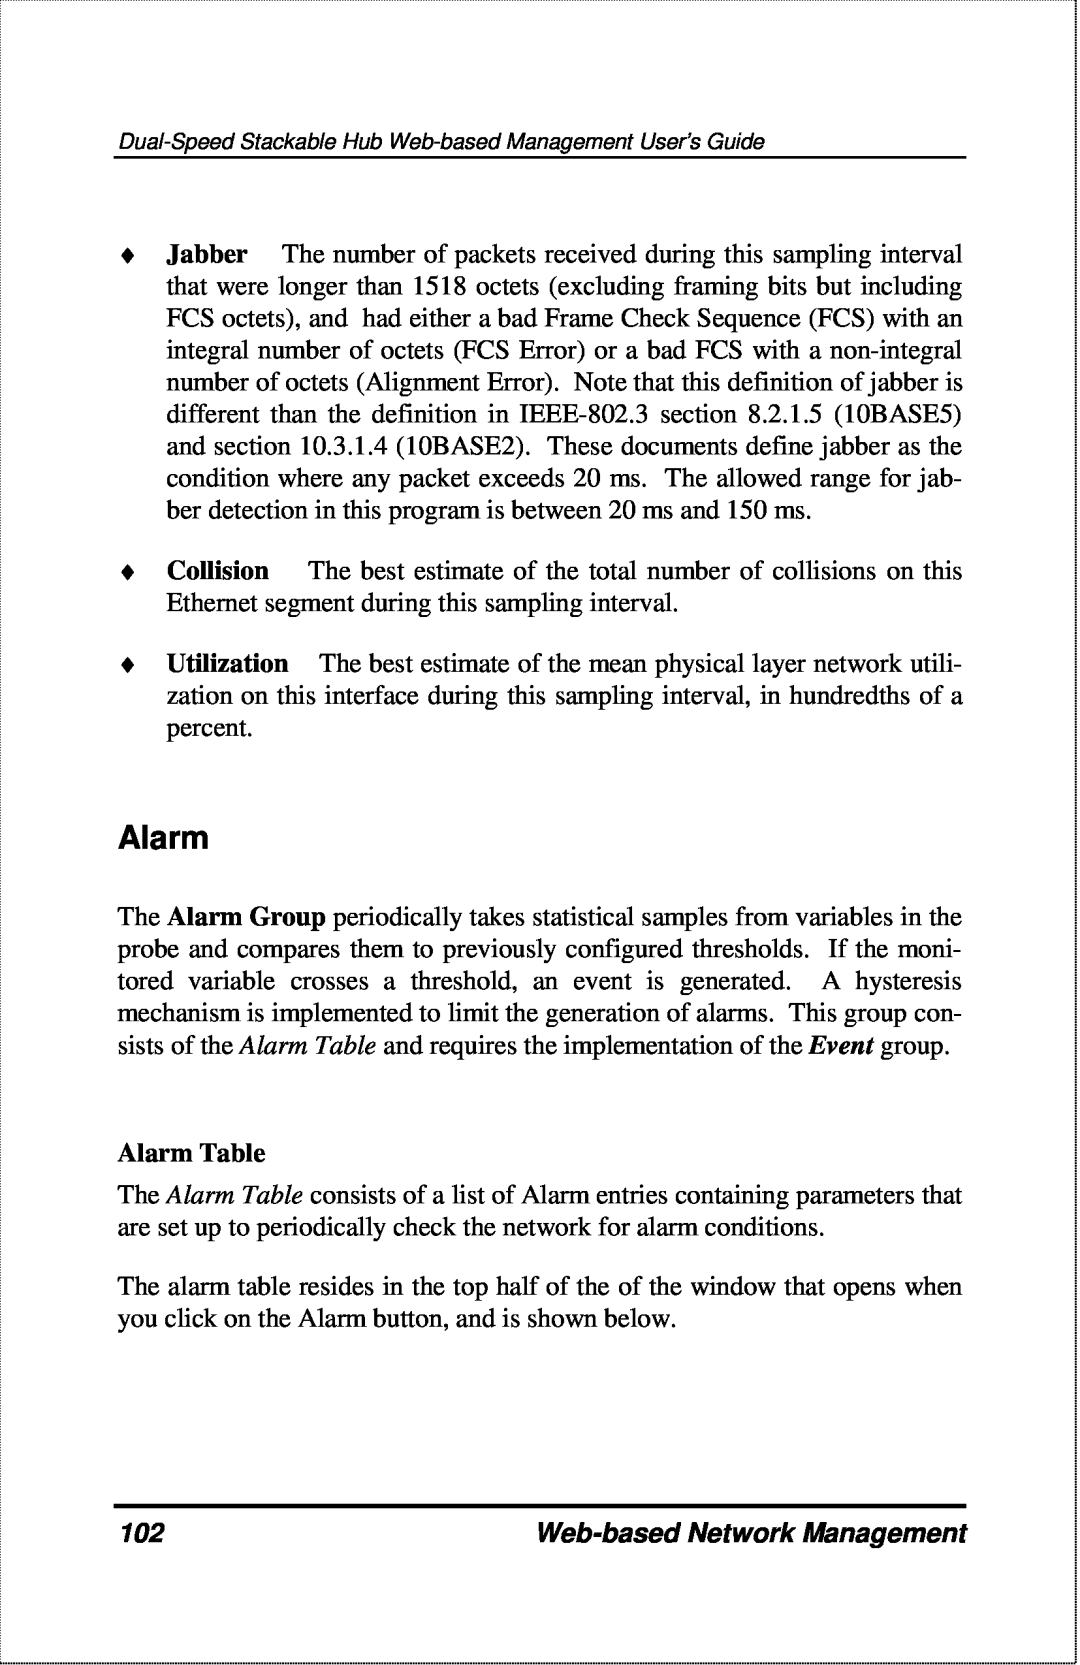 D-Link DFE-2600 manual Alarm Table, Web-based Network Management 